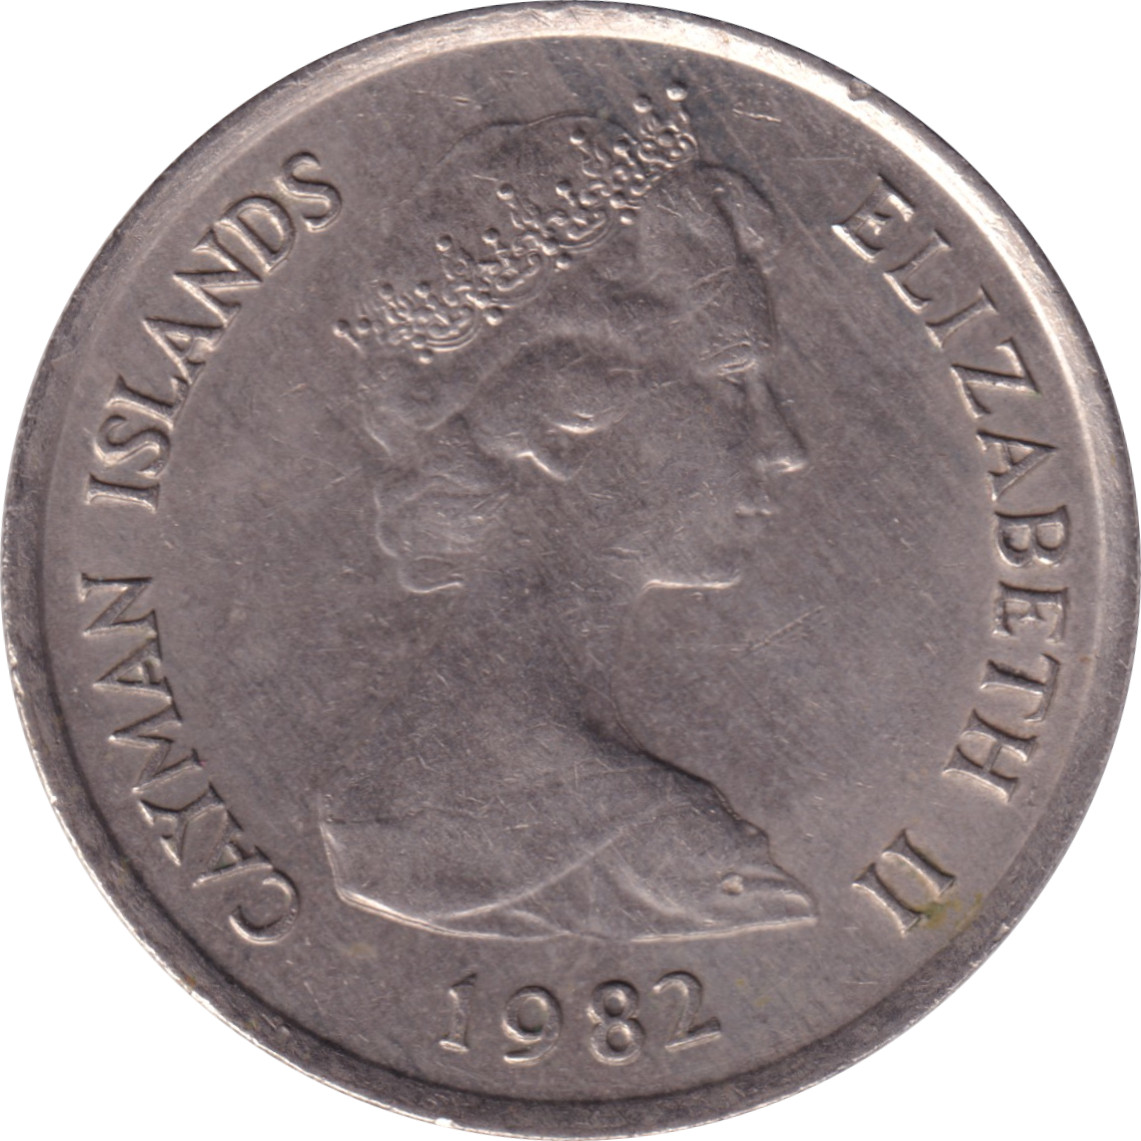 25 cents - Elizabeth II - Buste jeune